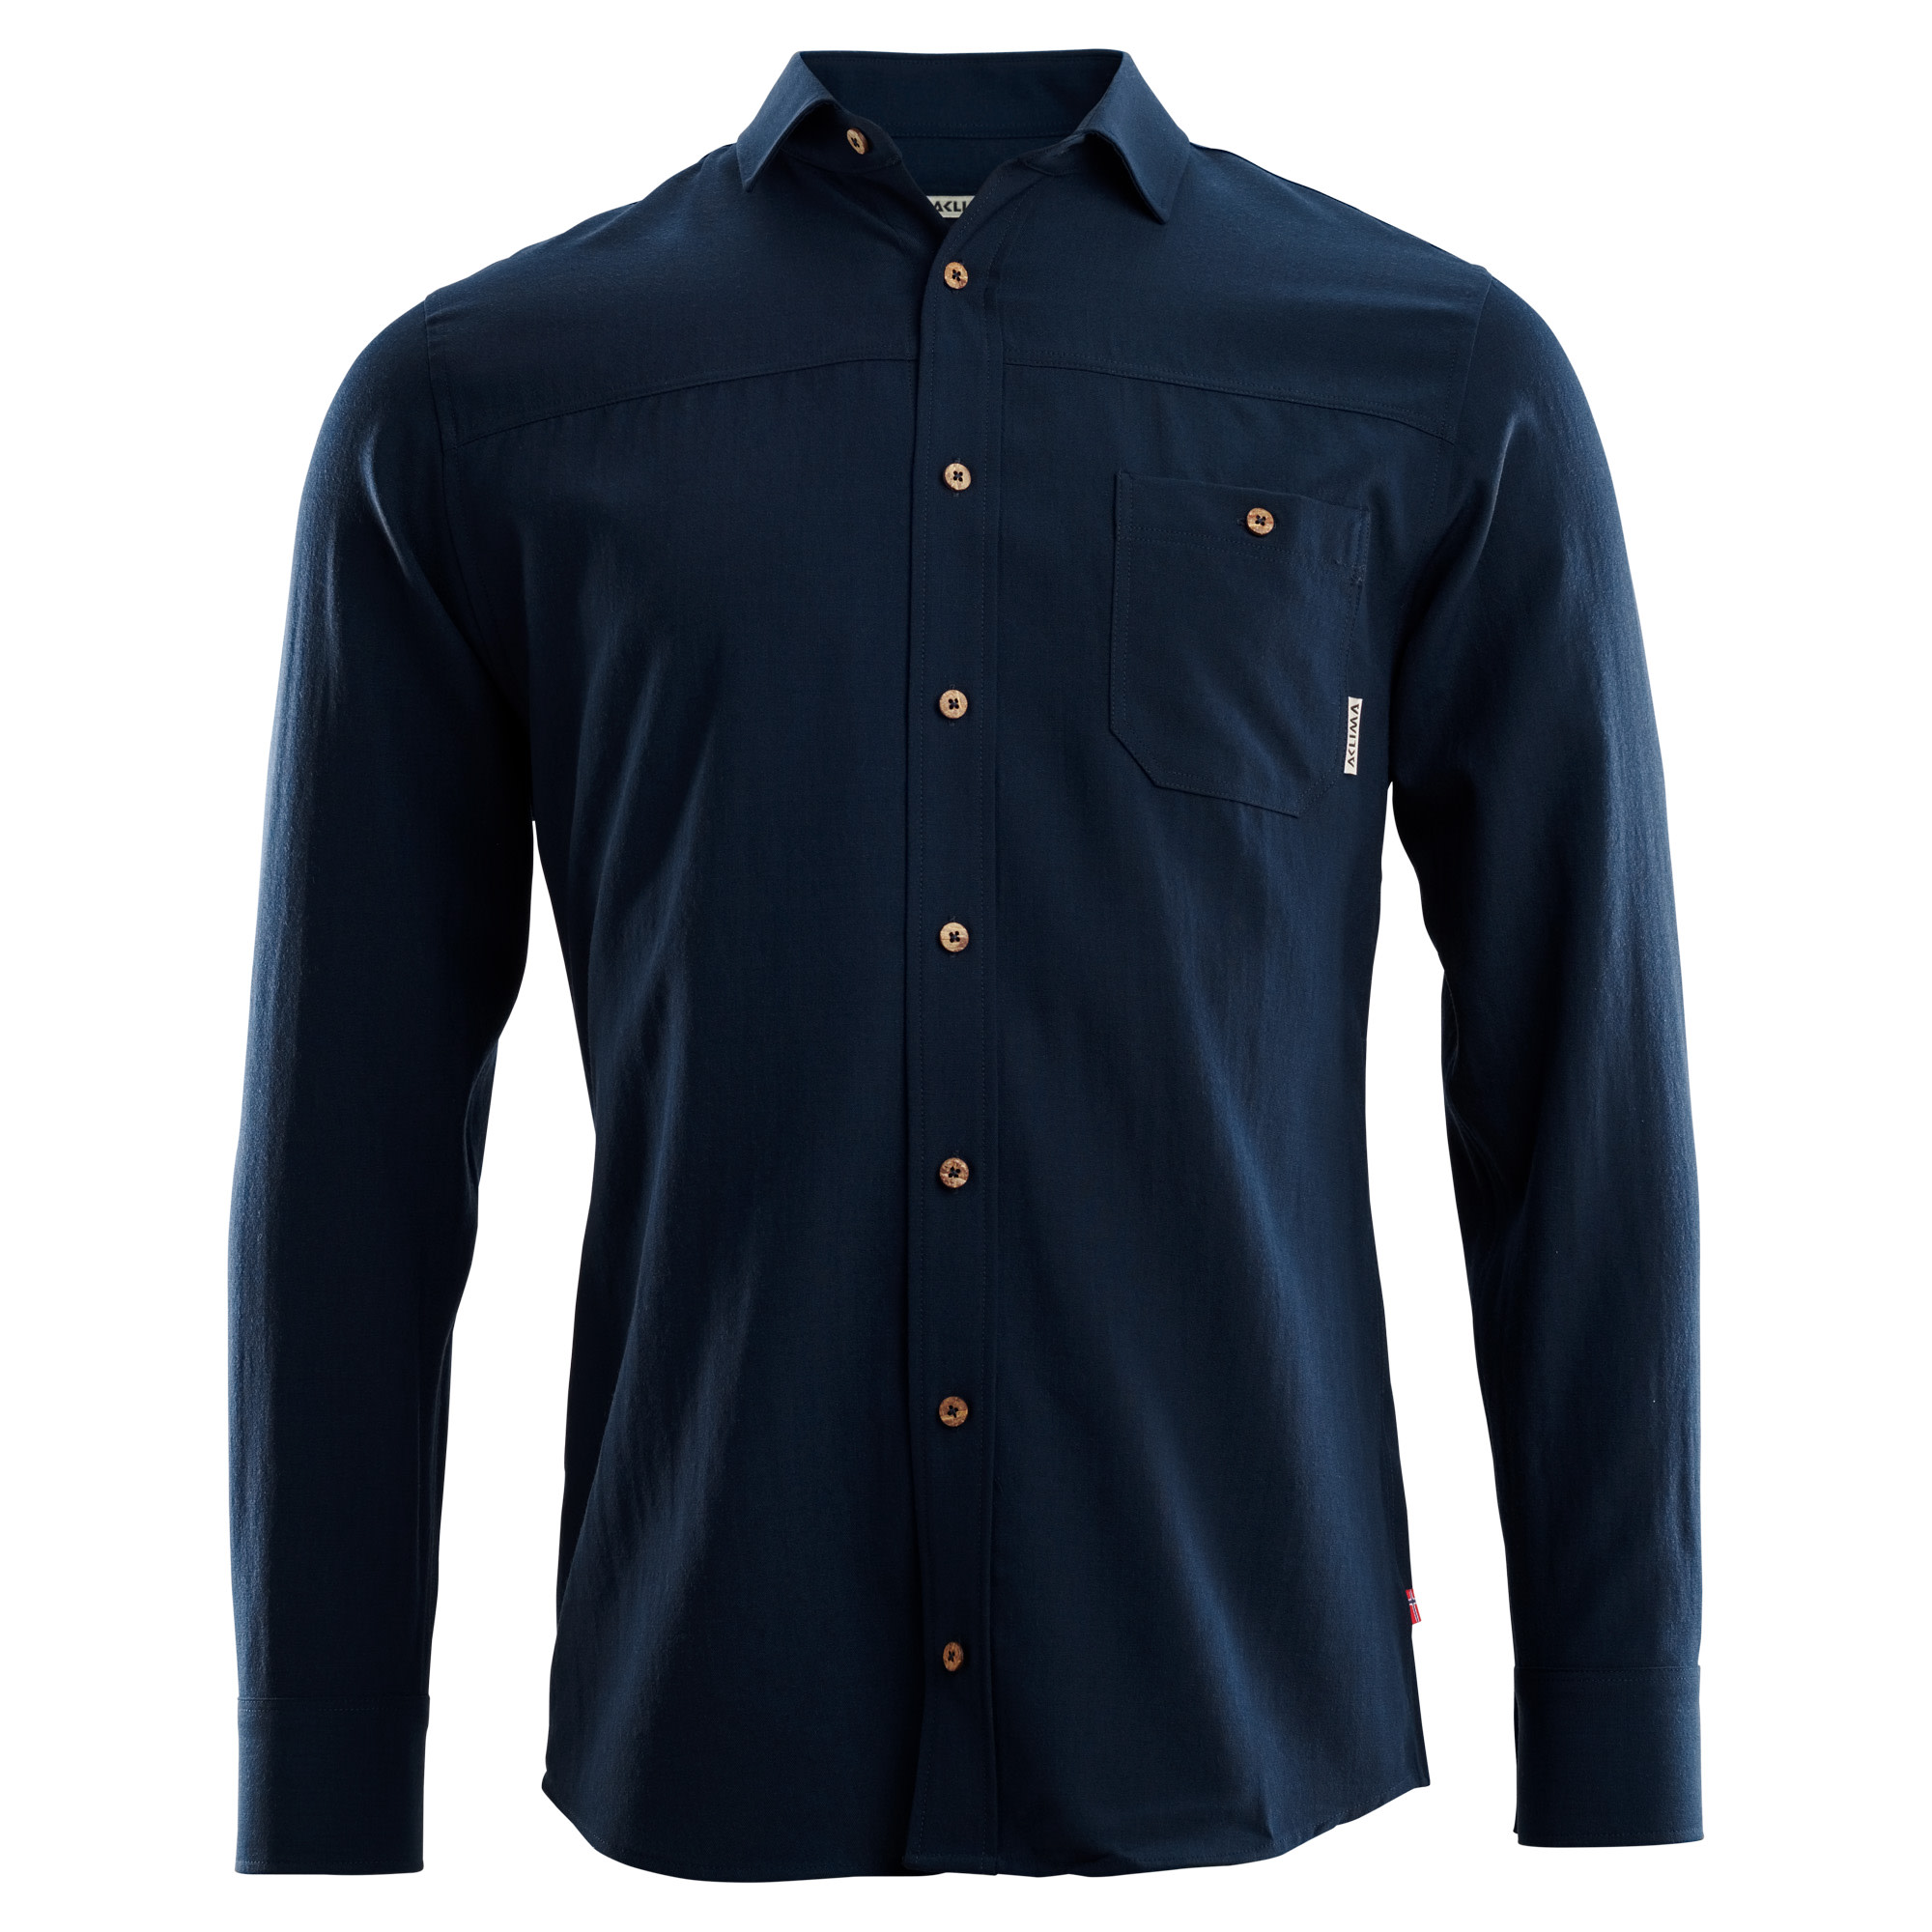 Buy LeisureWool Woven Wool Shirt Man Navy Blazer here | Outnorth